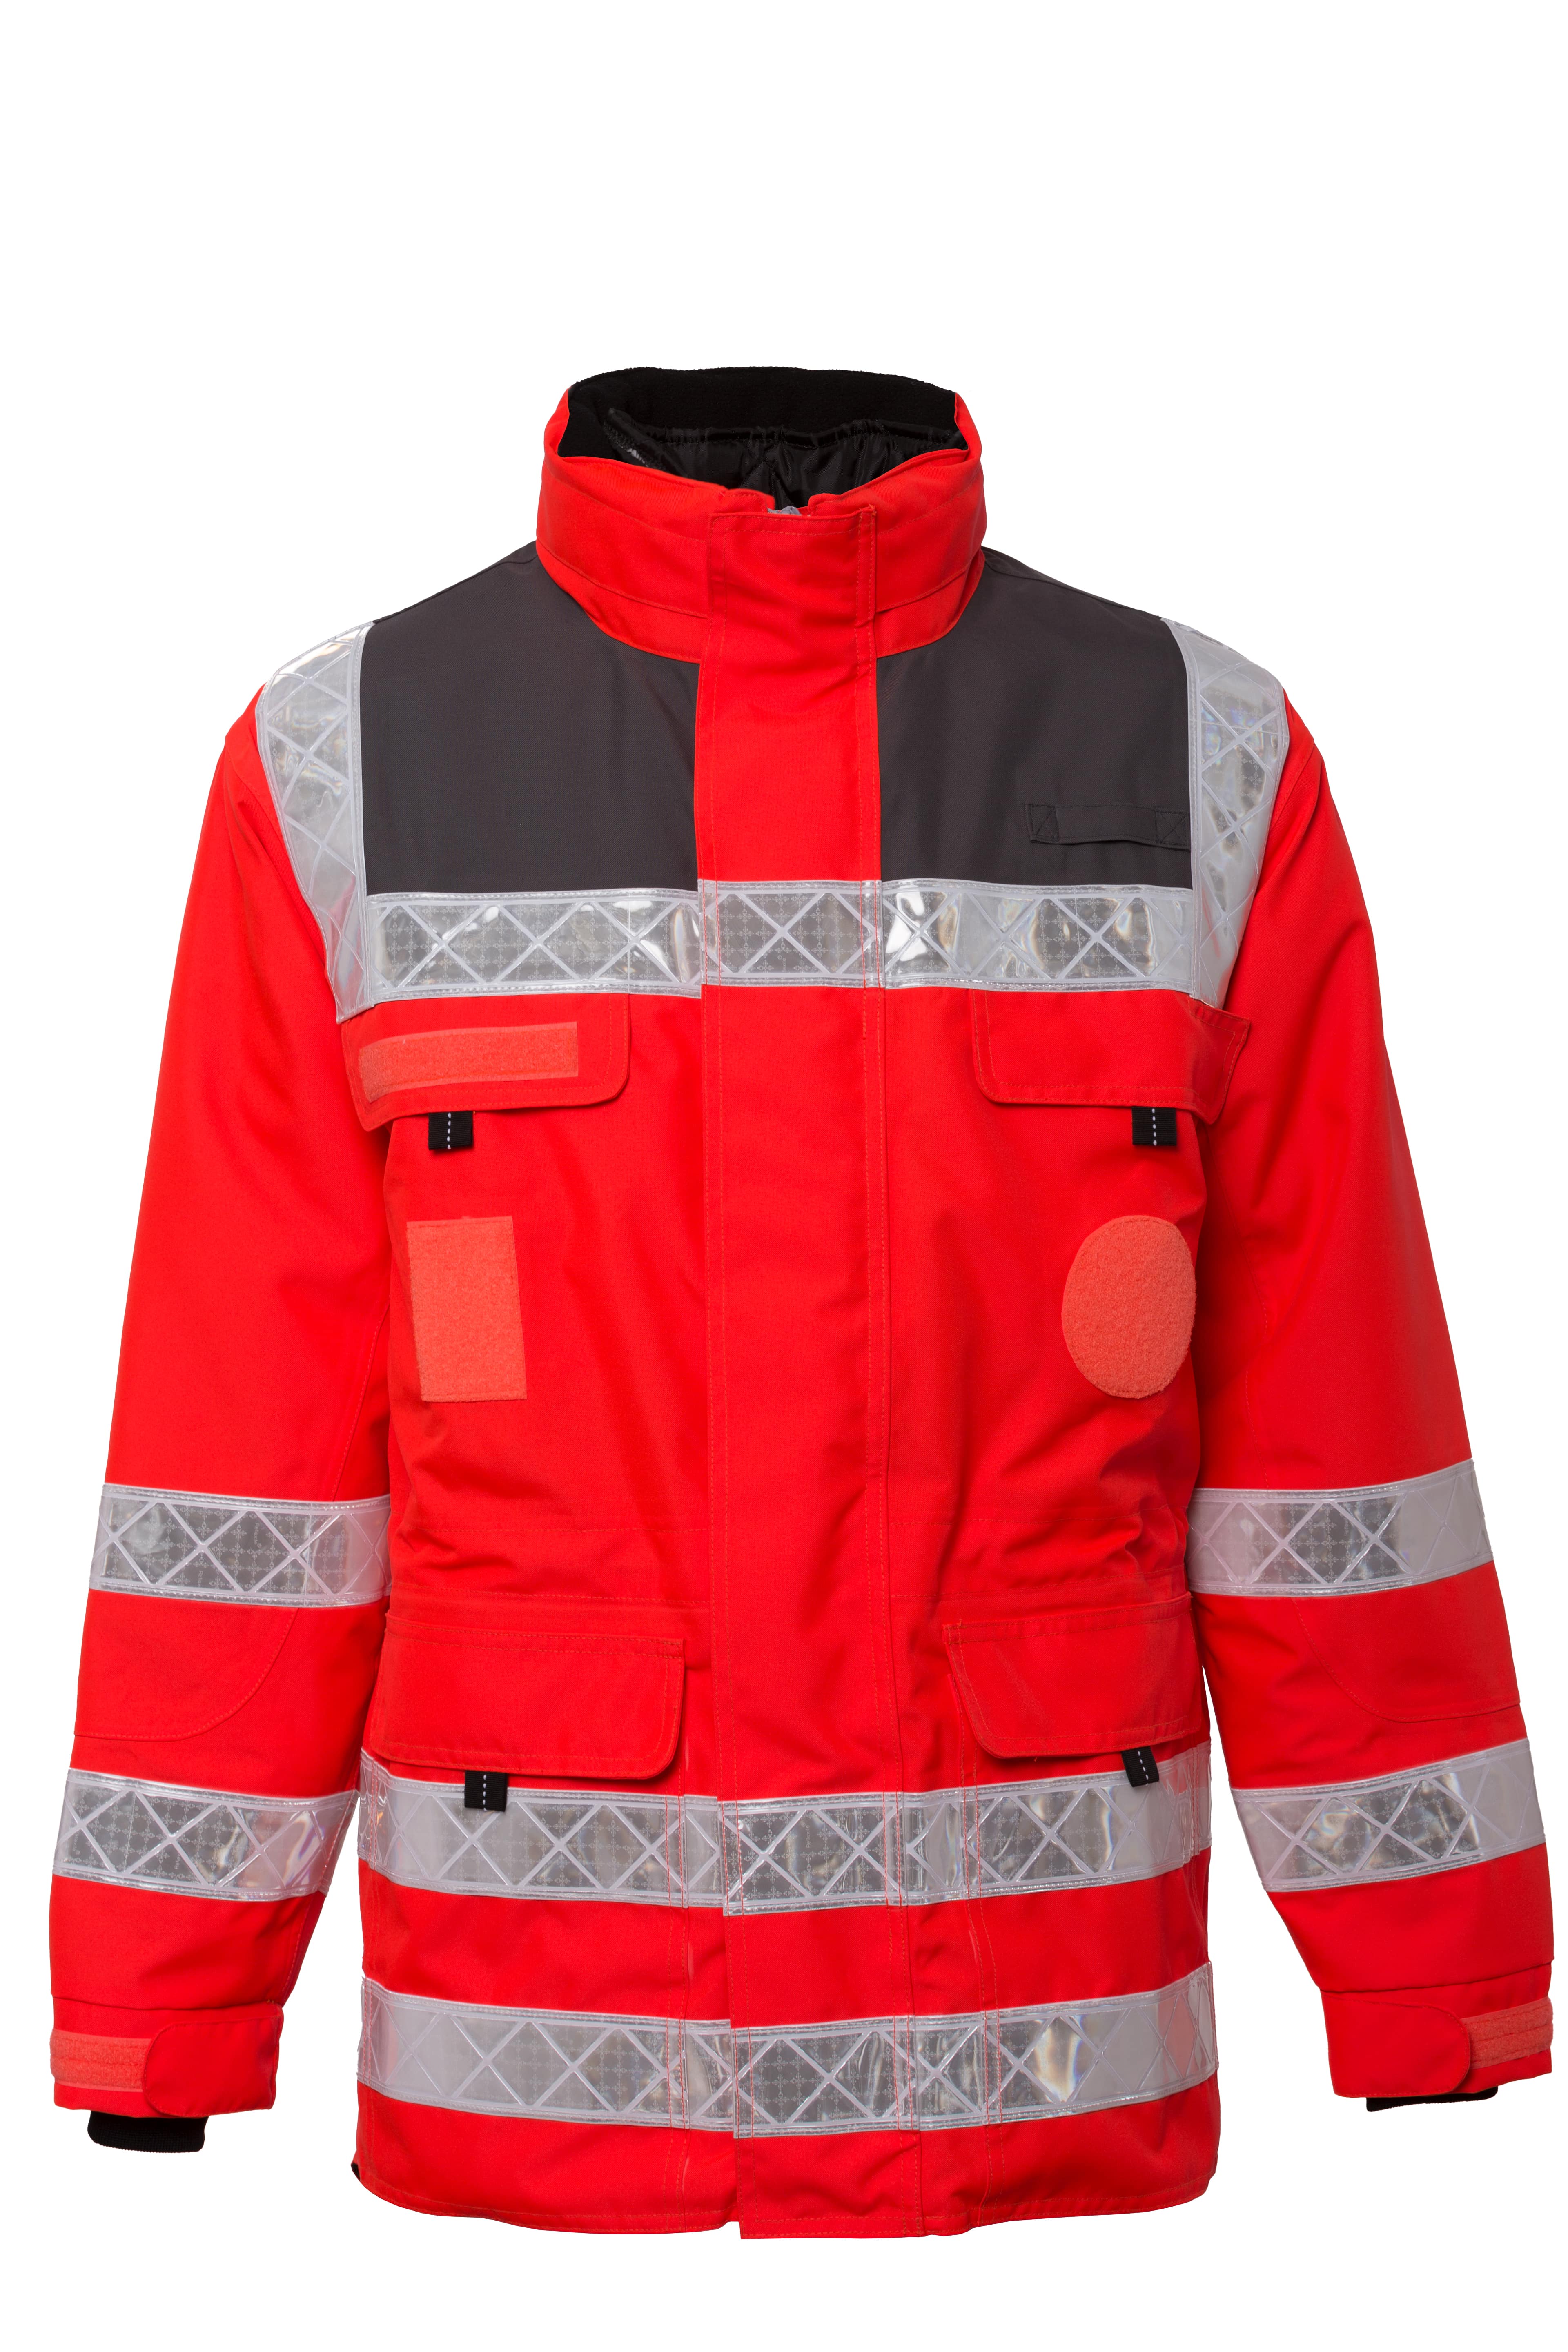 Rescuewear Midi-Parker 33855PRIS DRK Hessen HiVis Klasse 3 Neon Rot / Grau